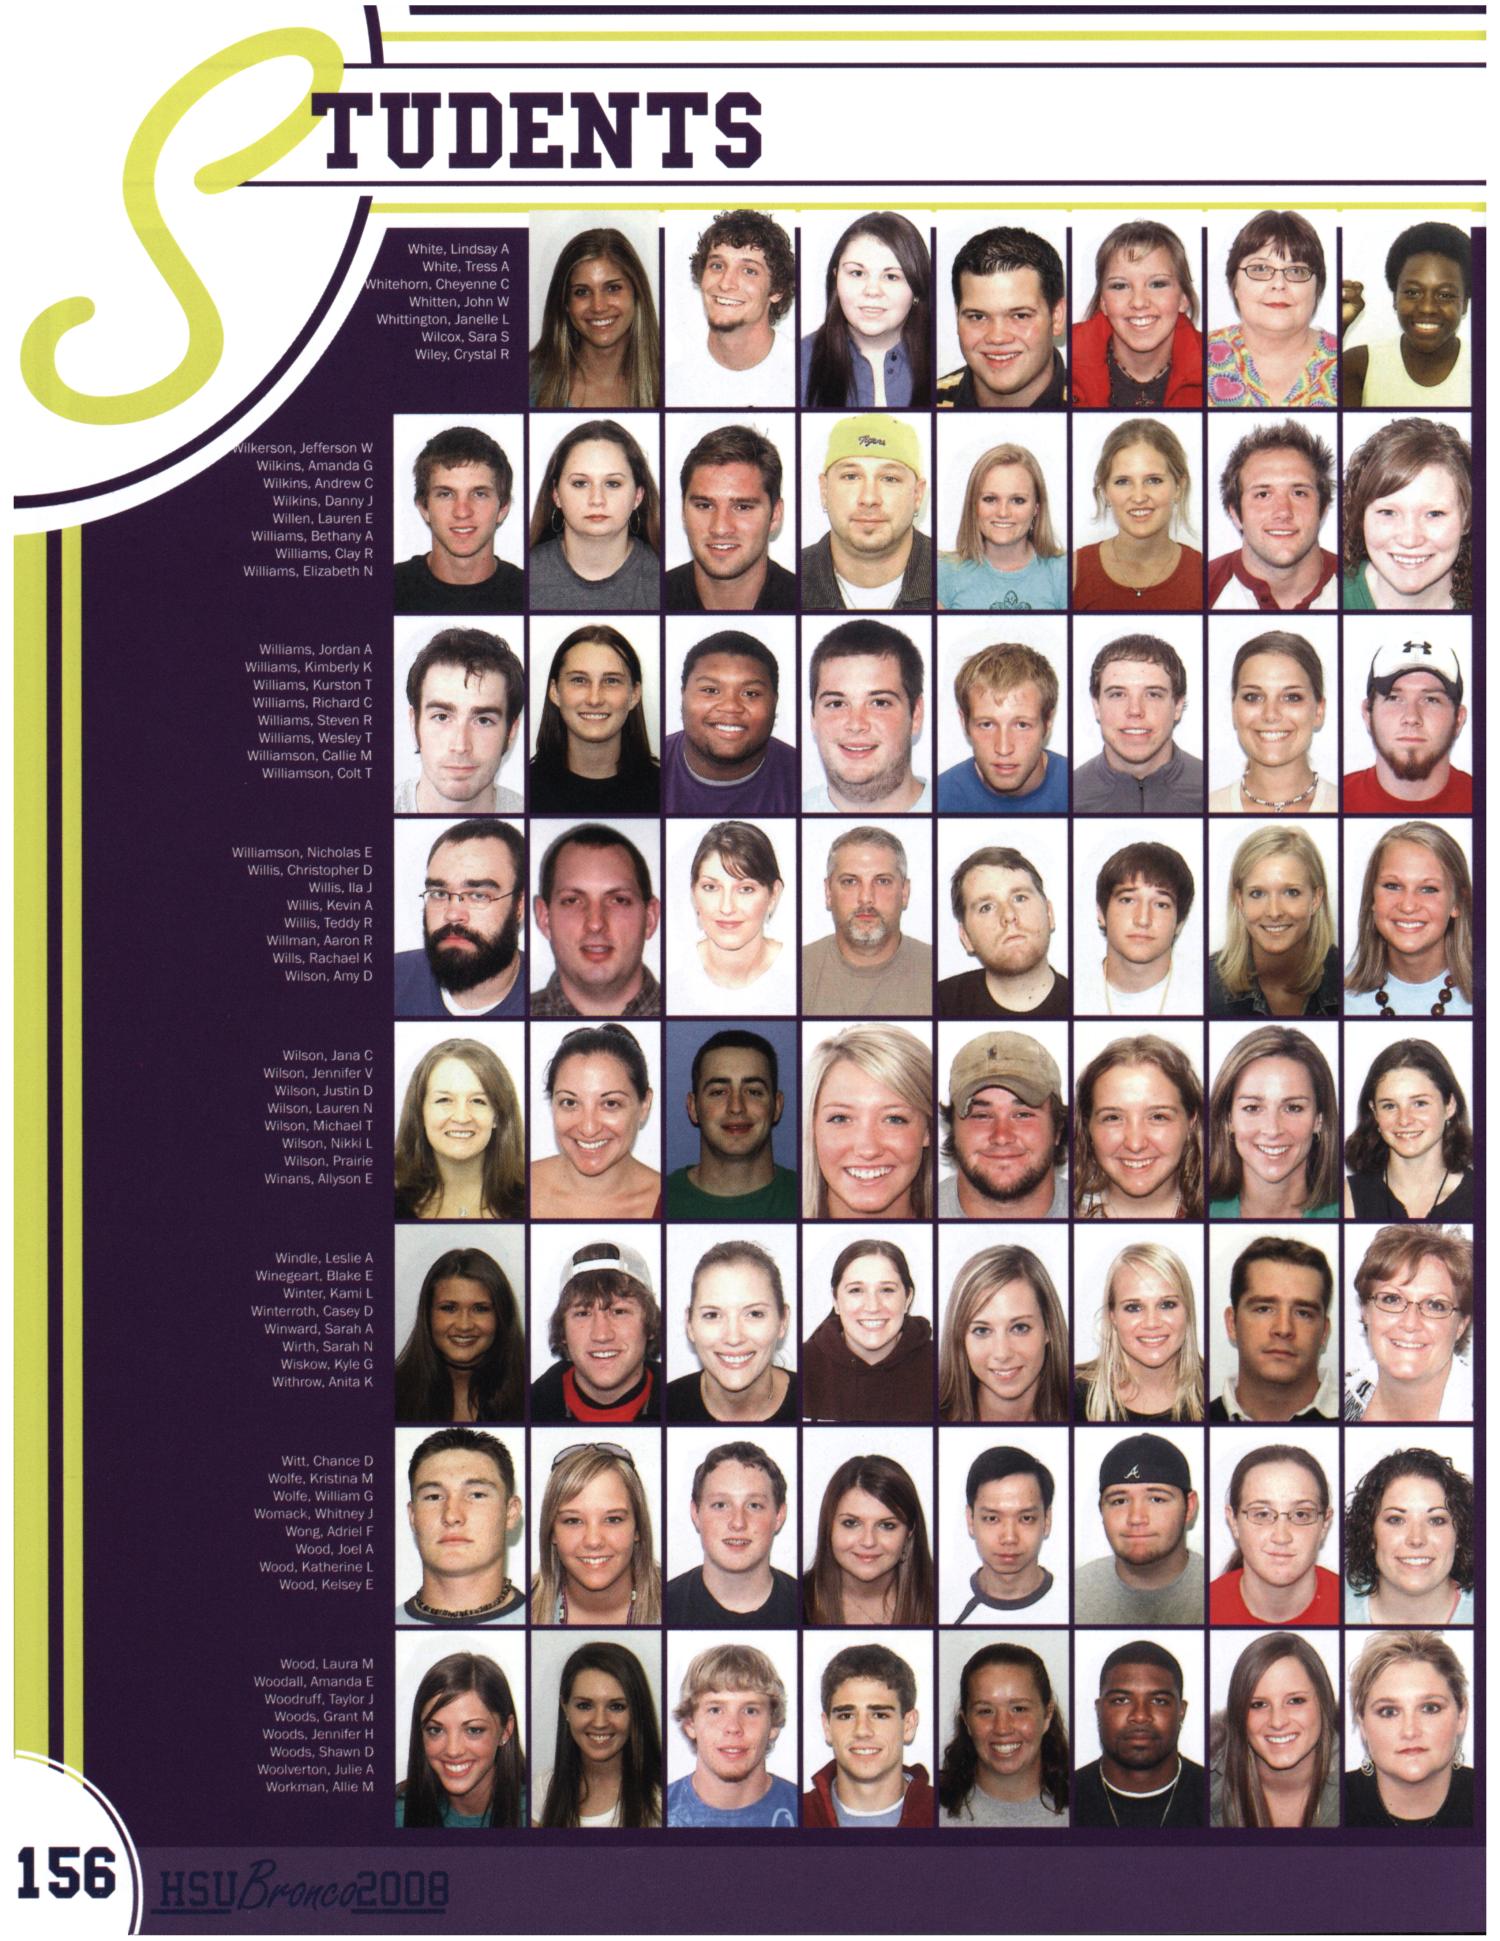 The Bronco, Yearbook of Hardin-Simmons University, 2008
                                                
                                                    156
                                                